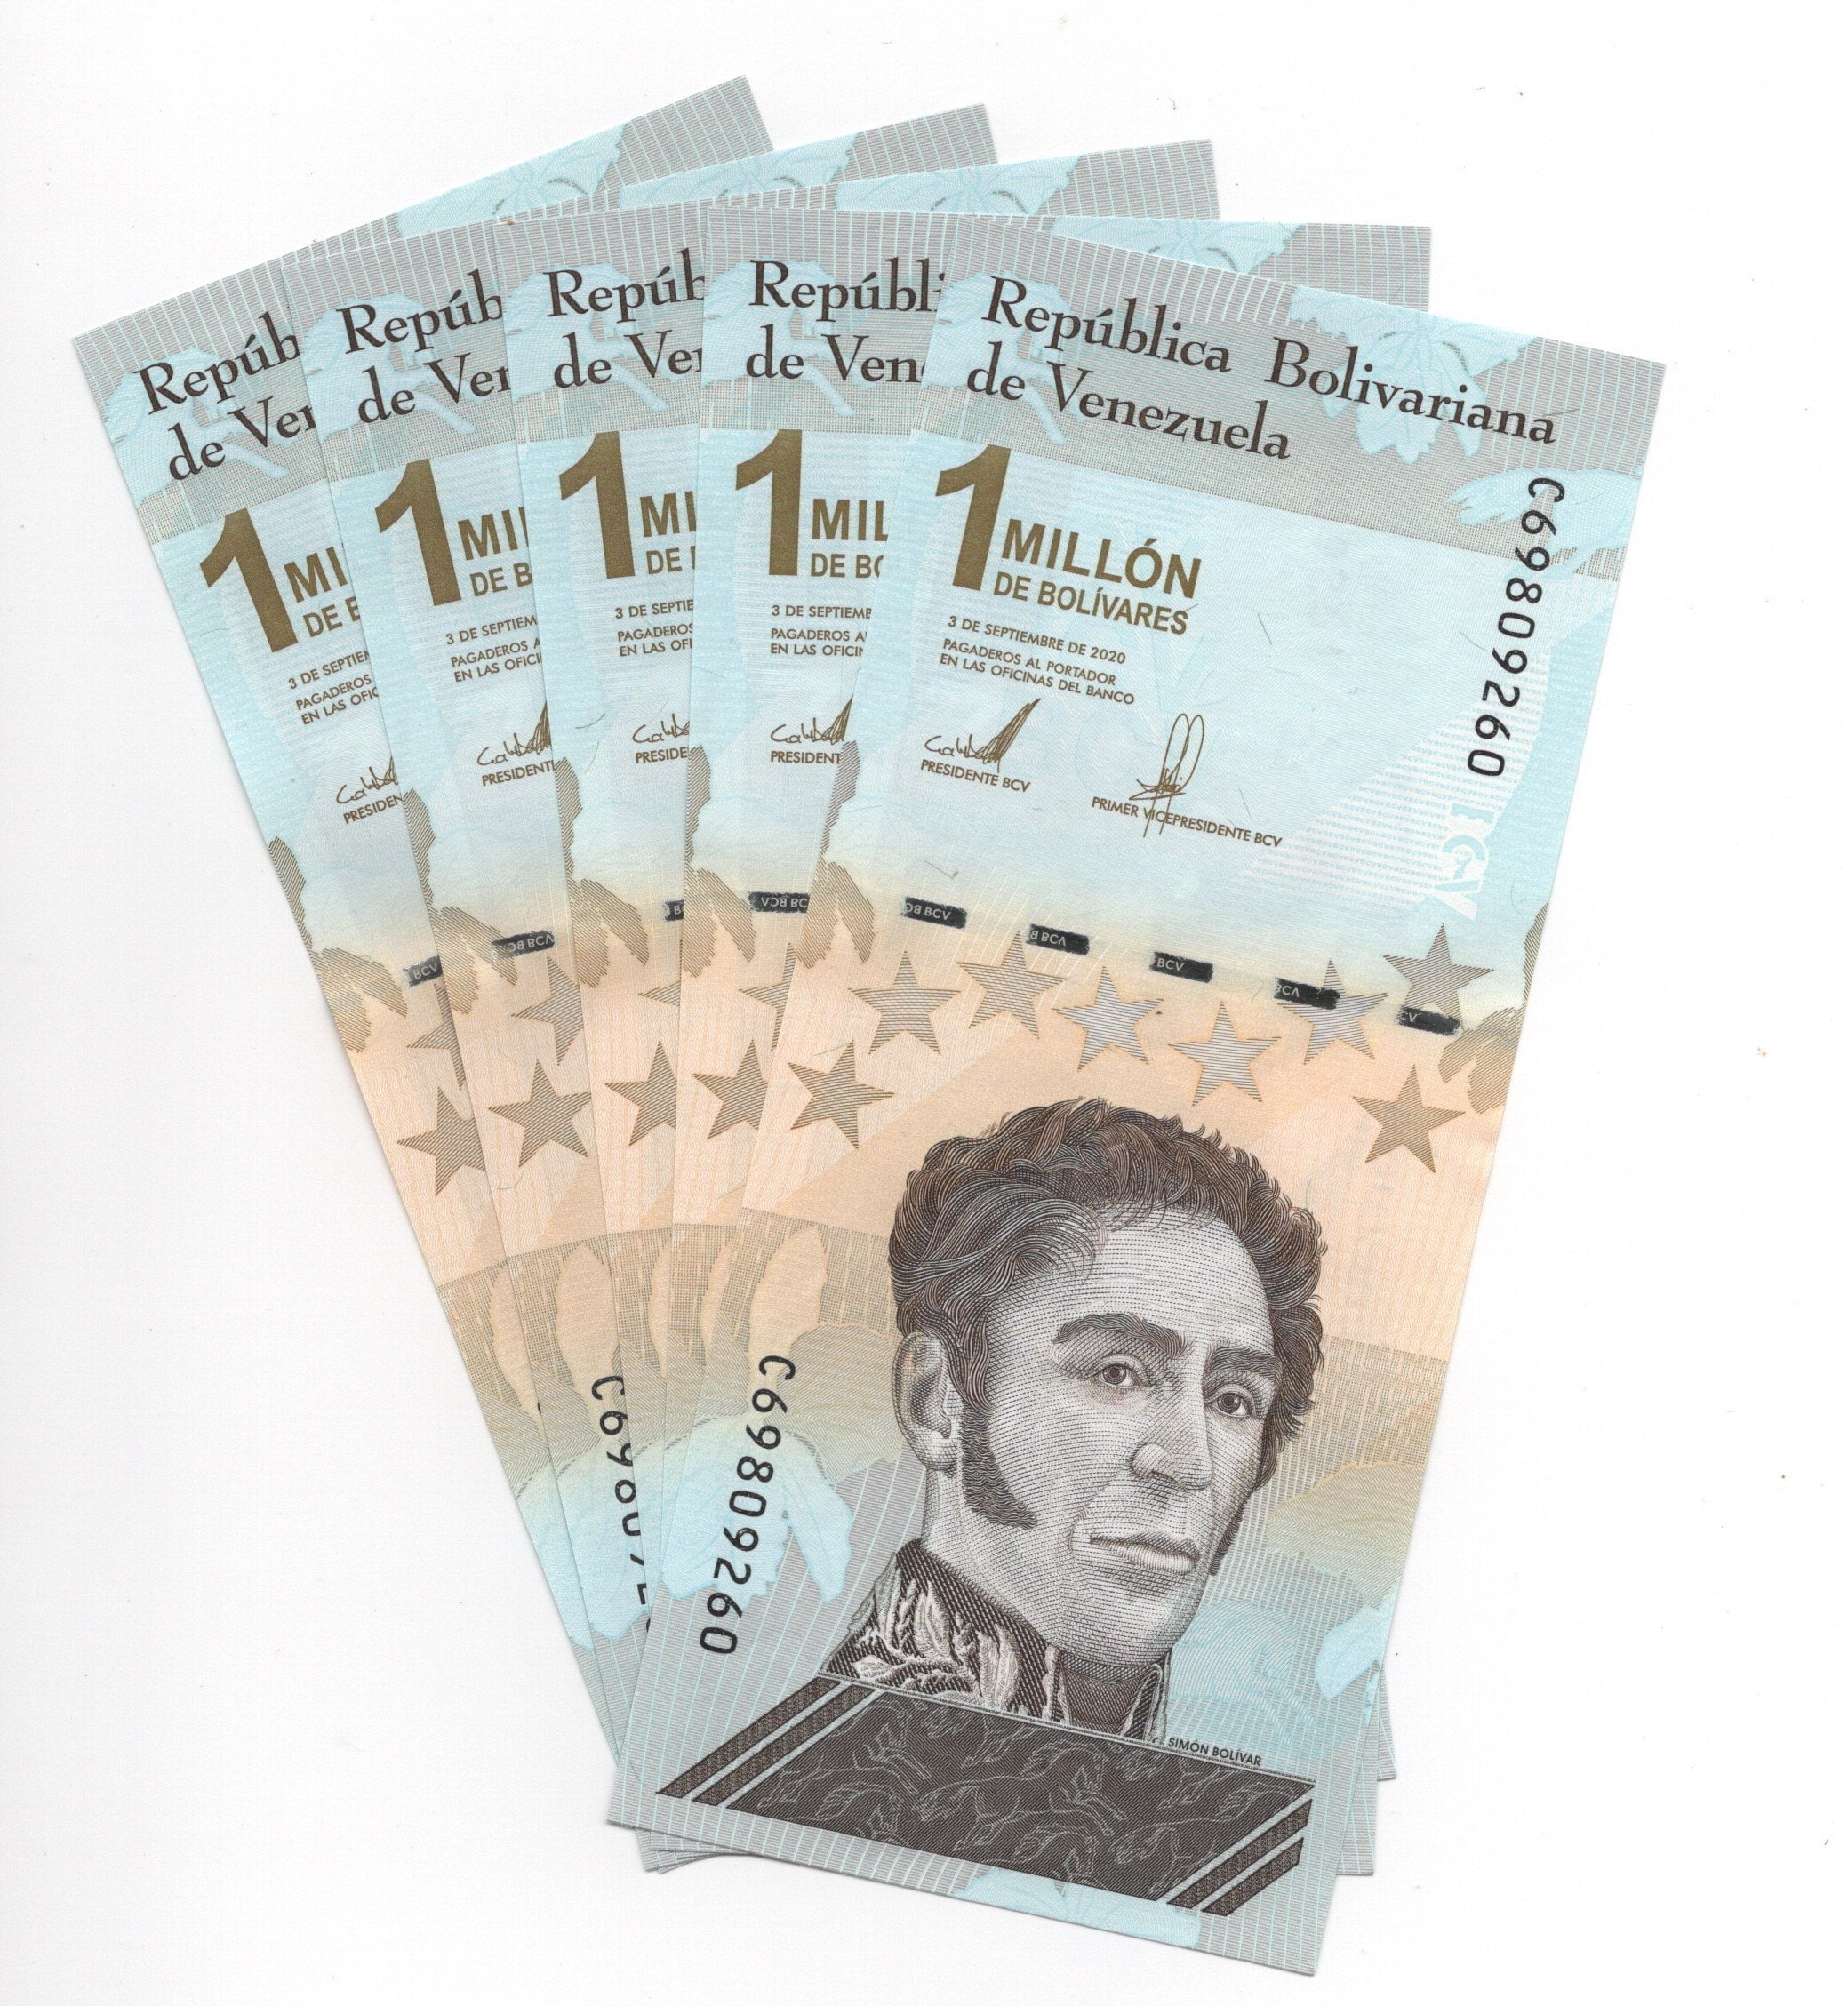 Venezuela's bolivar depreciates to 20 per dollar as prices rise | Reuters